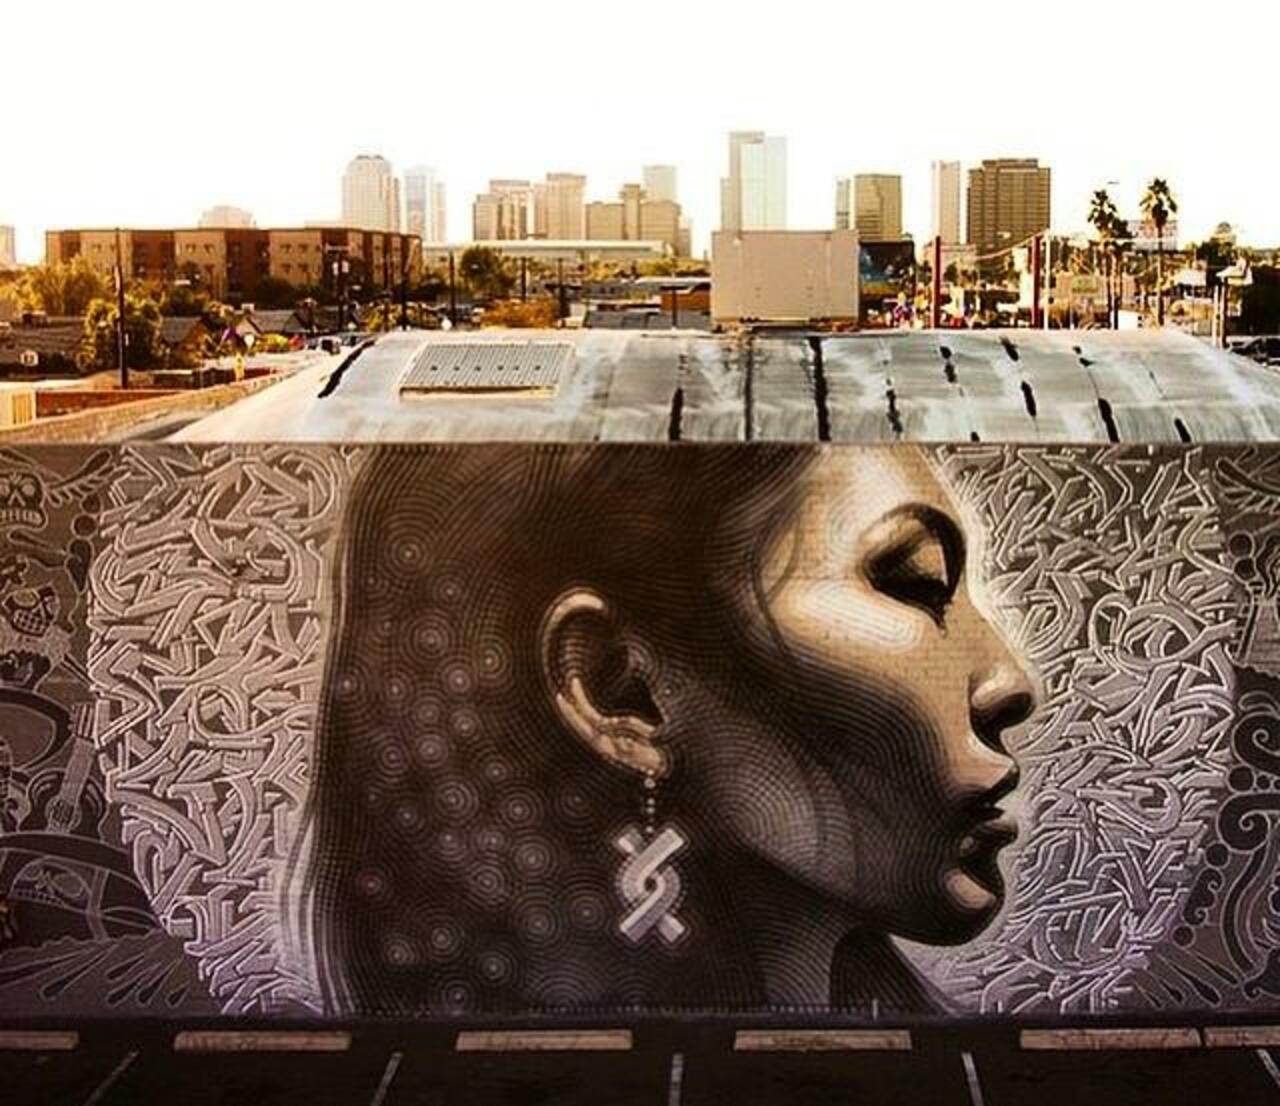 Latest Street Art work by El Mac in Phoenix, Arizona

#art #mural #graffiti #streetart http://t.co/exroVTOECY